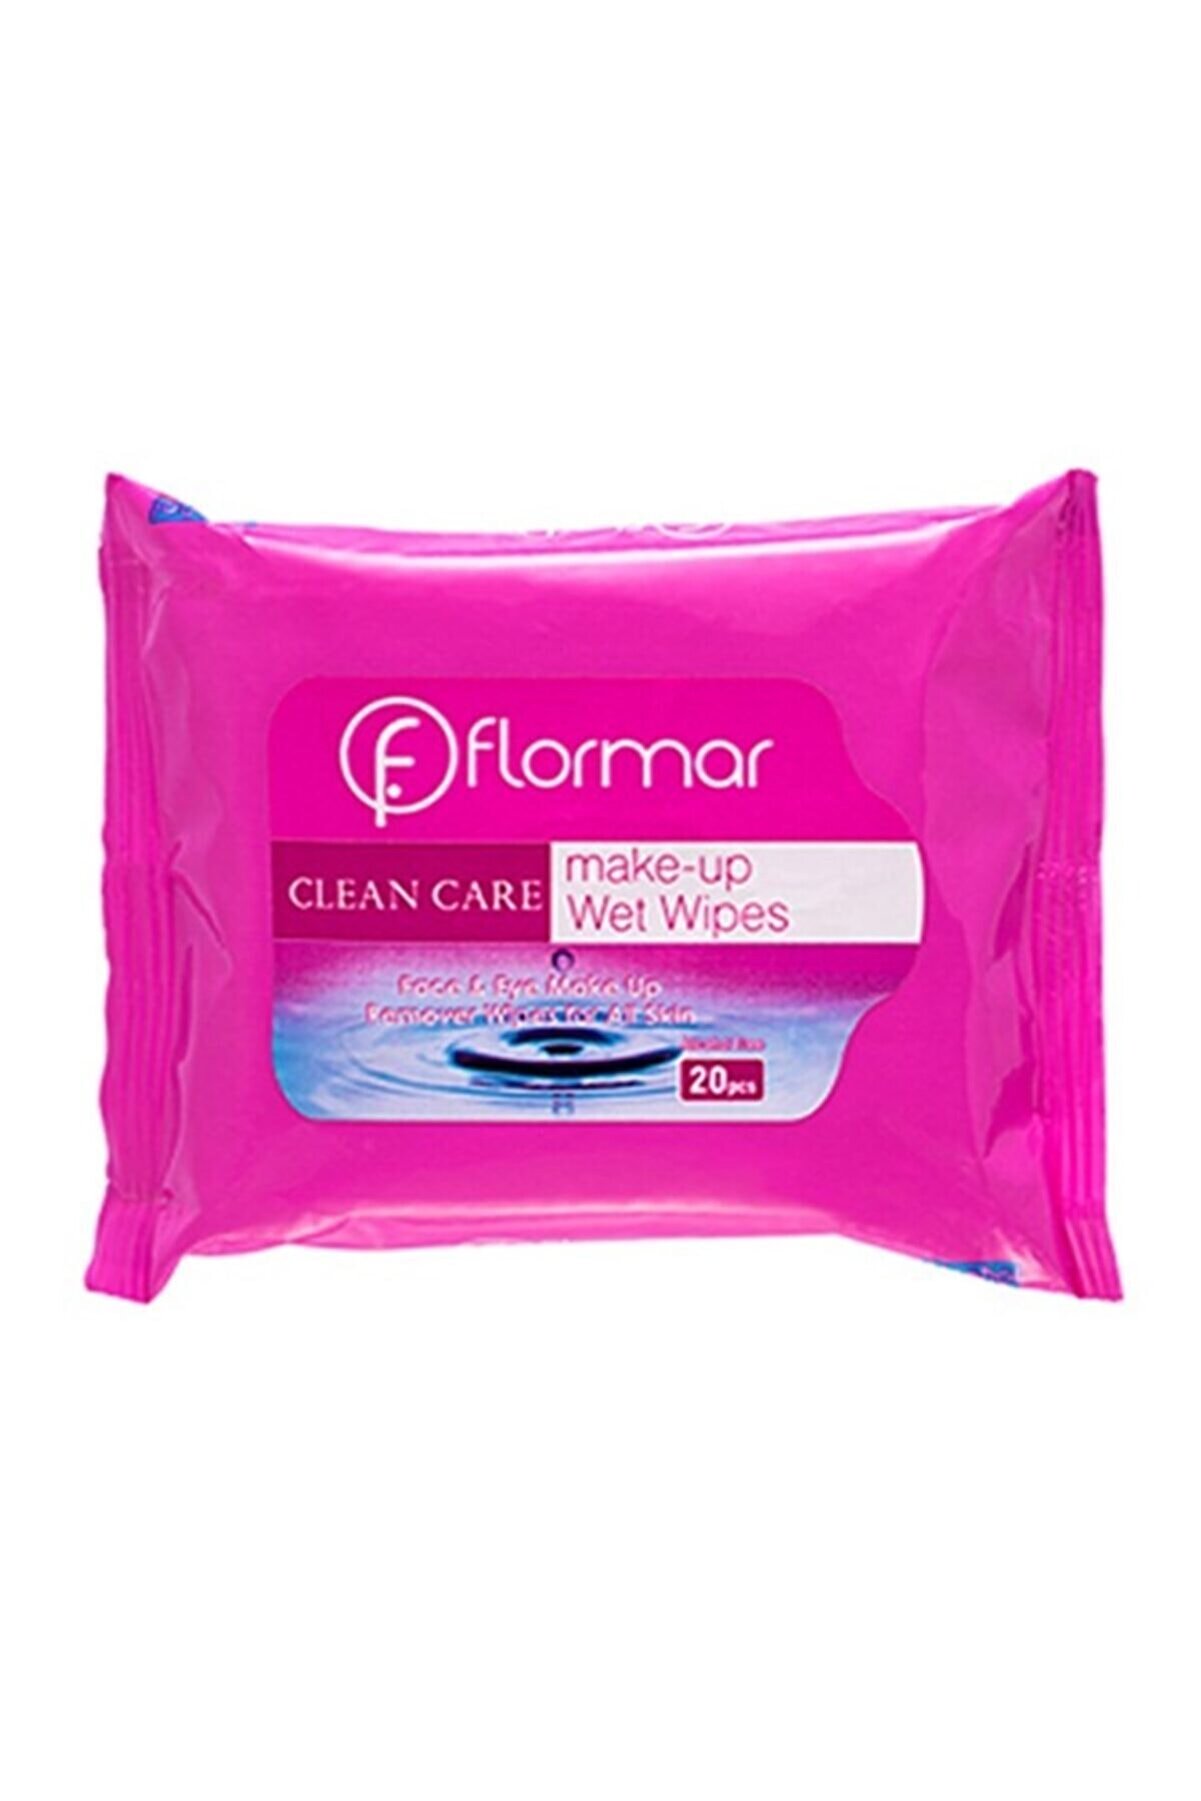 Flormar Makyaj Temizleme Mendili - Clean Care Make-up Wet Wipes 20 Adet 8690604103171